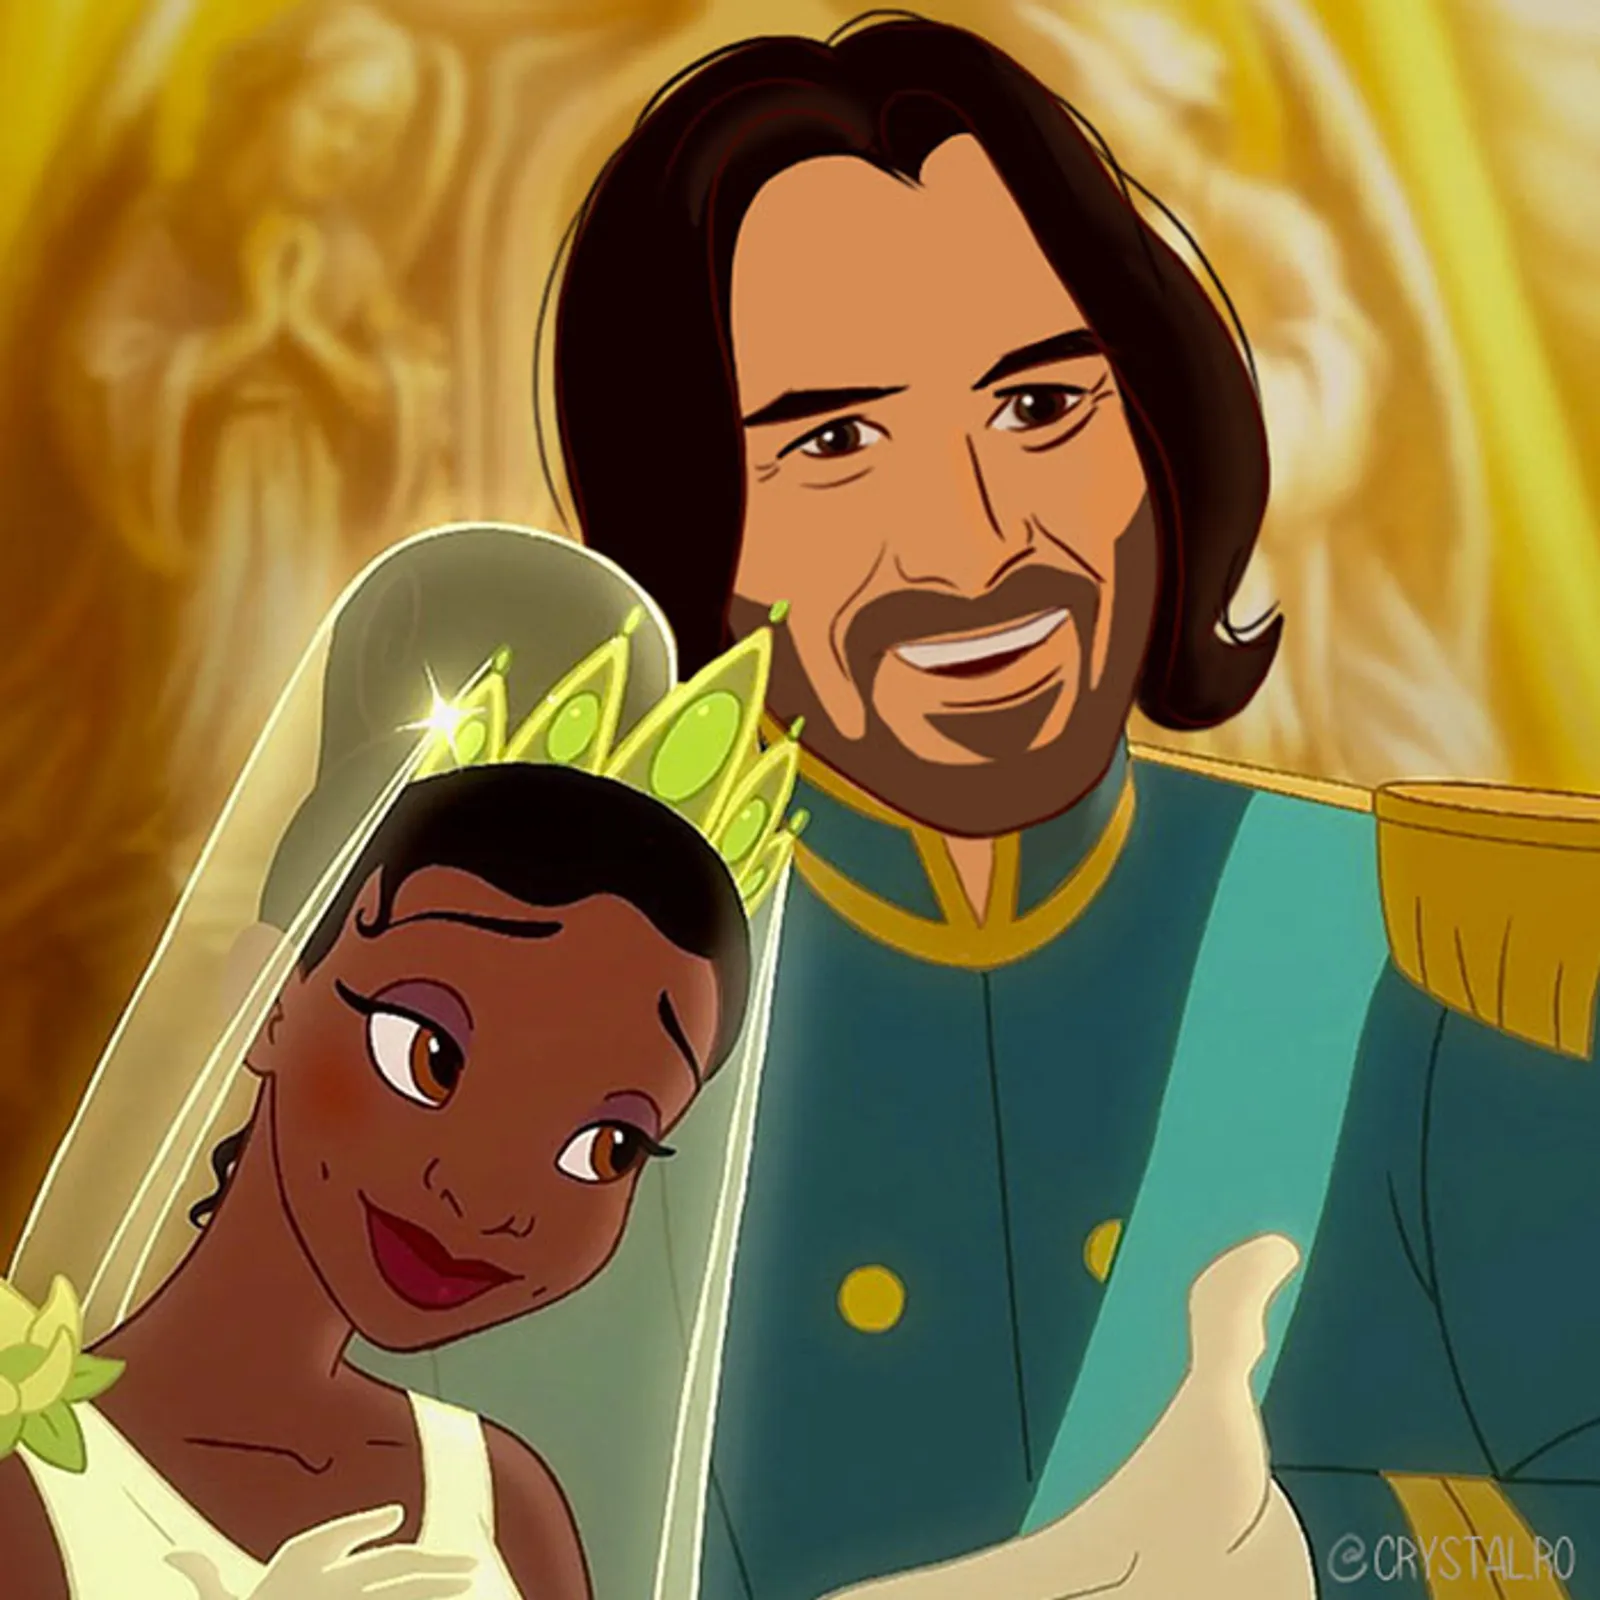 Begini Jadinya Kalau Keanu Reeves Jadi Disney Prince, Cocok Nggak, Ya?